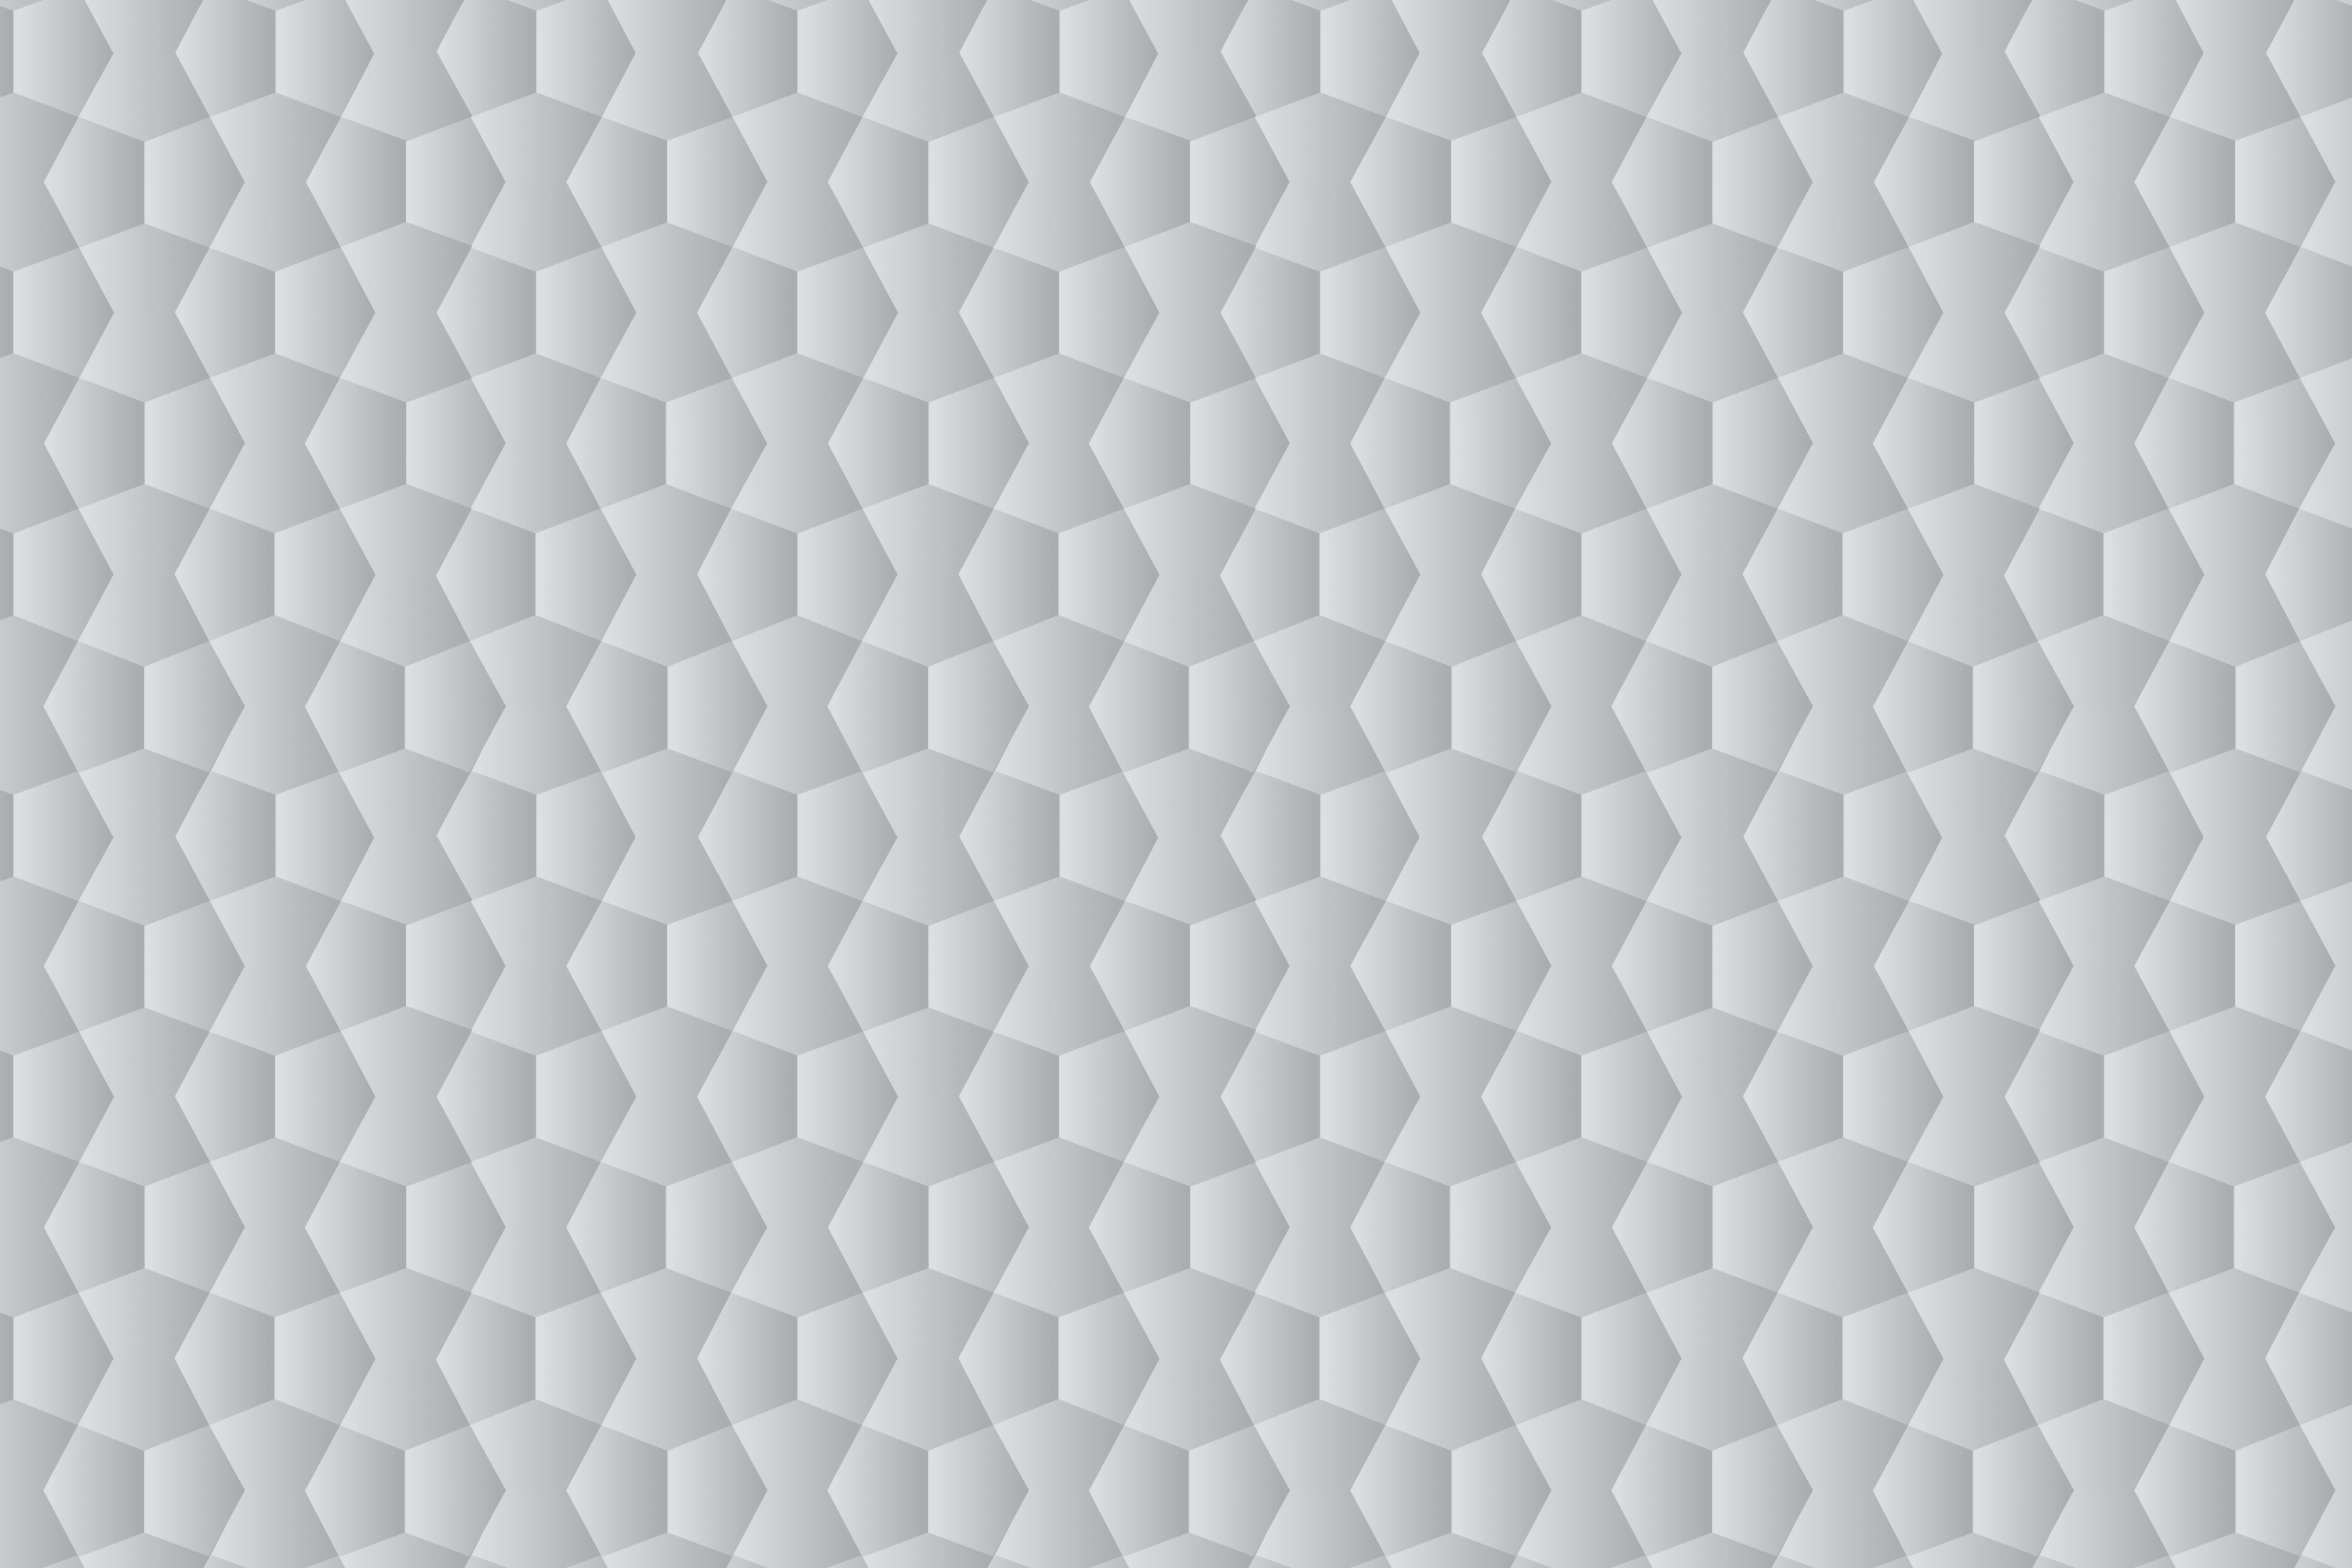 Geometric pentagon shapes subtle white background seamless pattern